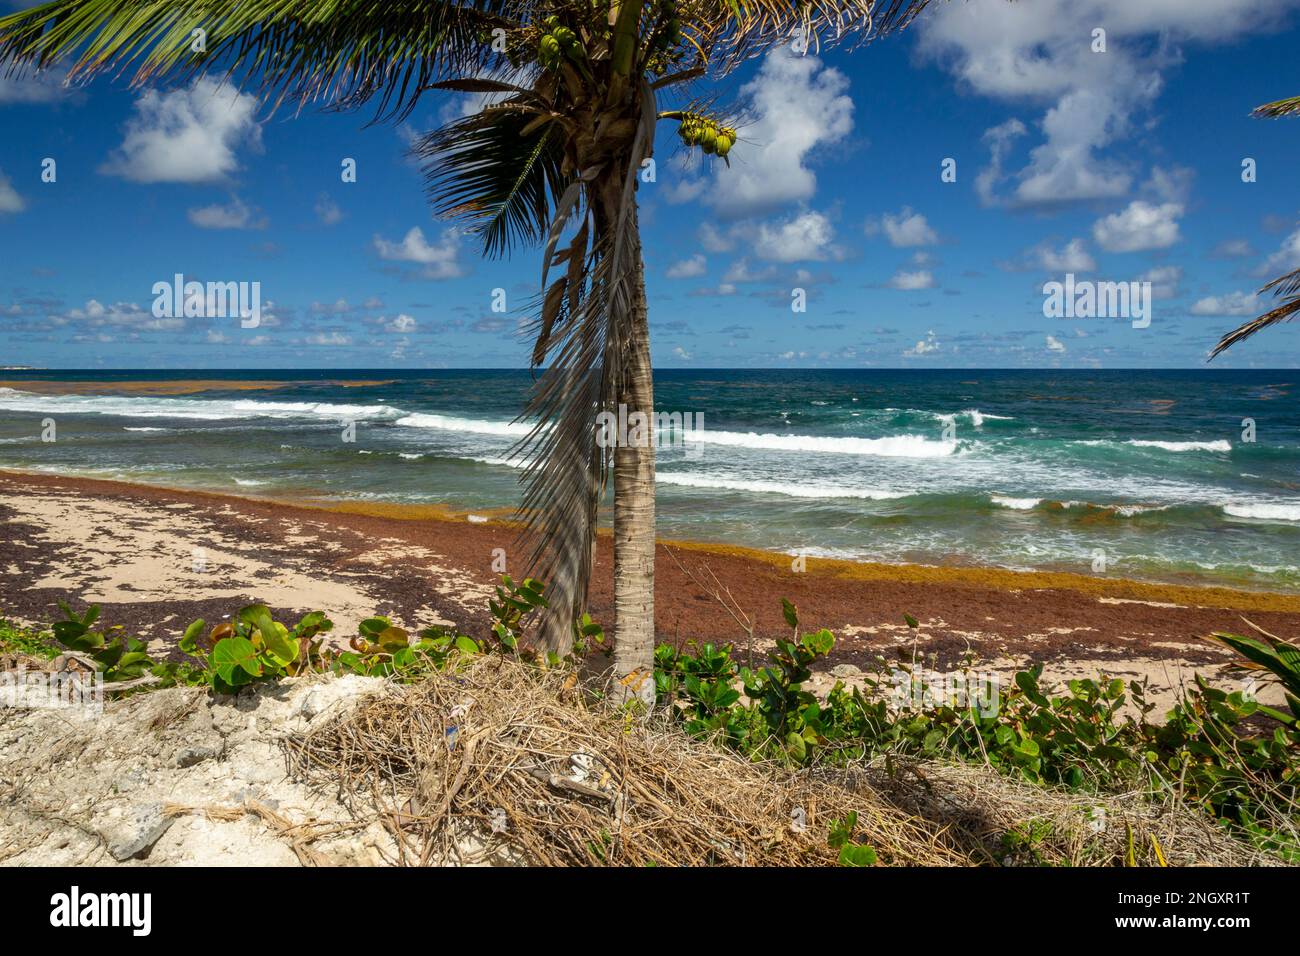 Bathsheba beach Barbados, Atlantic Ocean sea, big white breakers, turquoise sea, white sand and palm trees Stock Photo